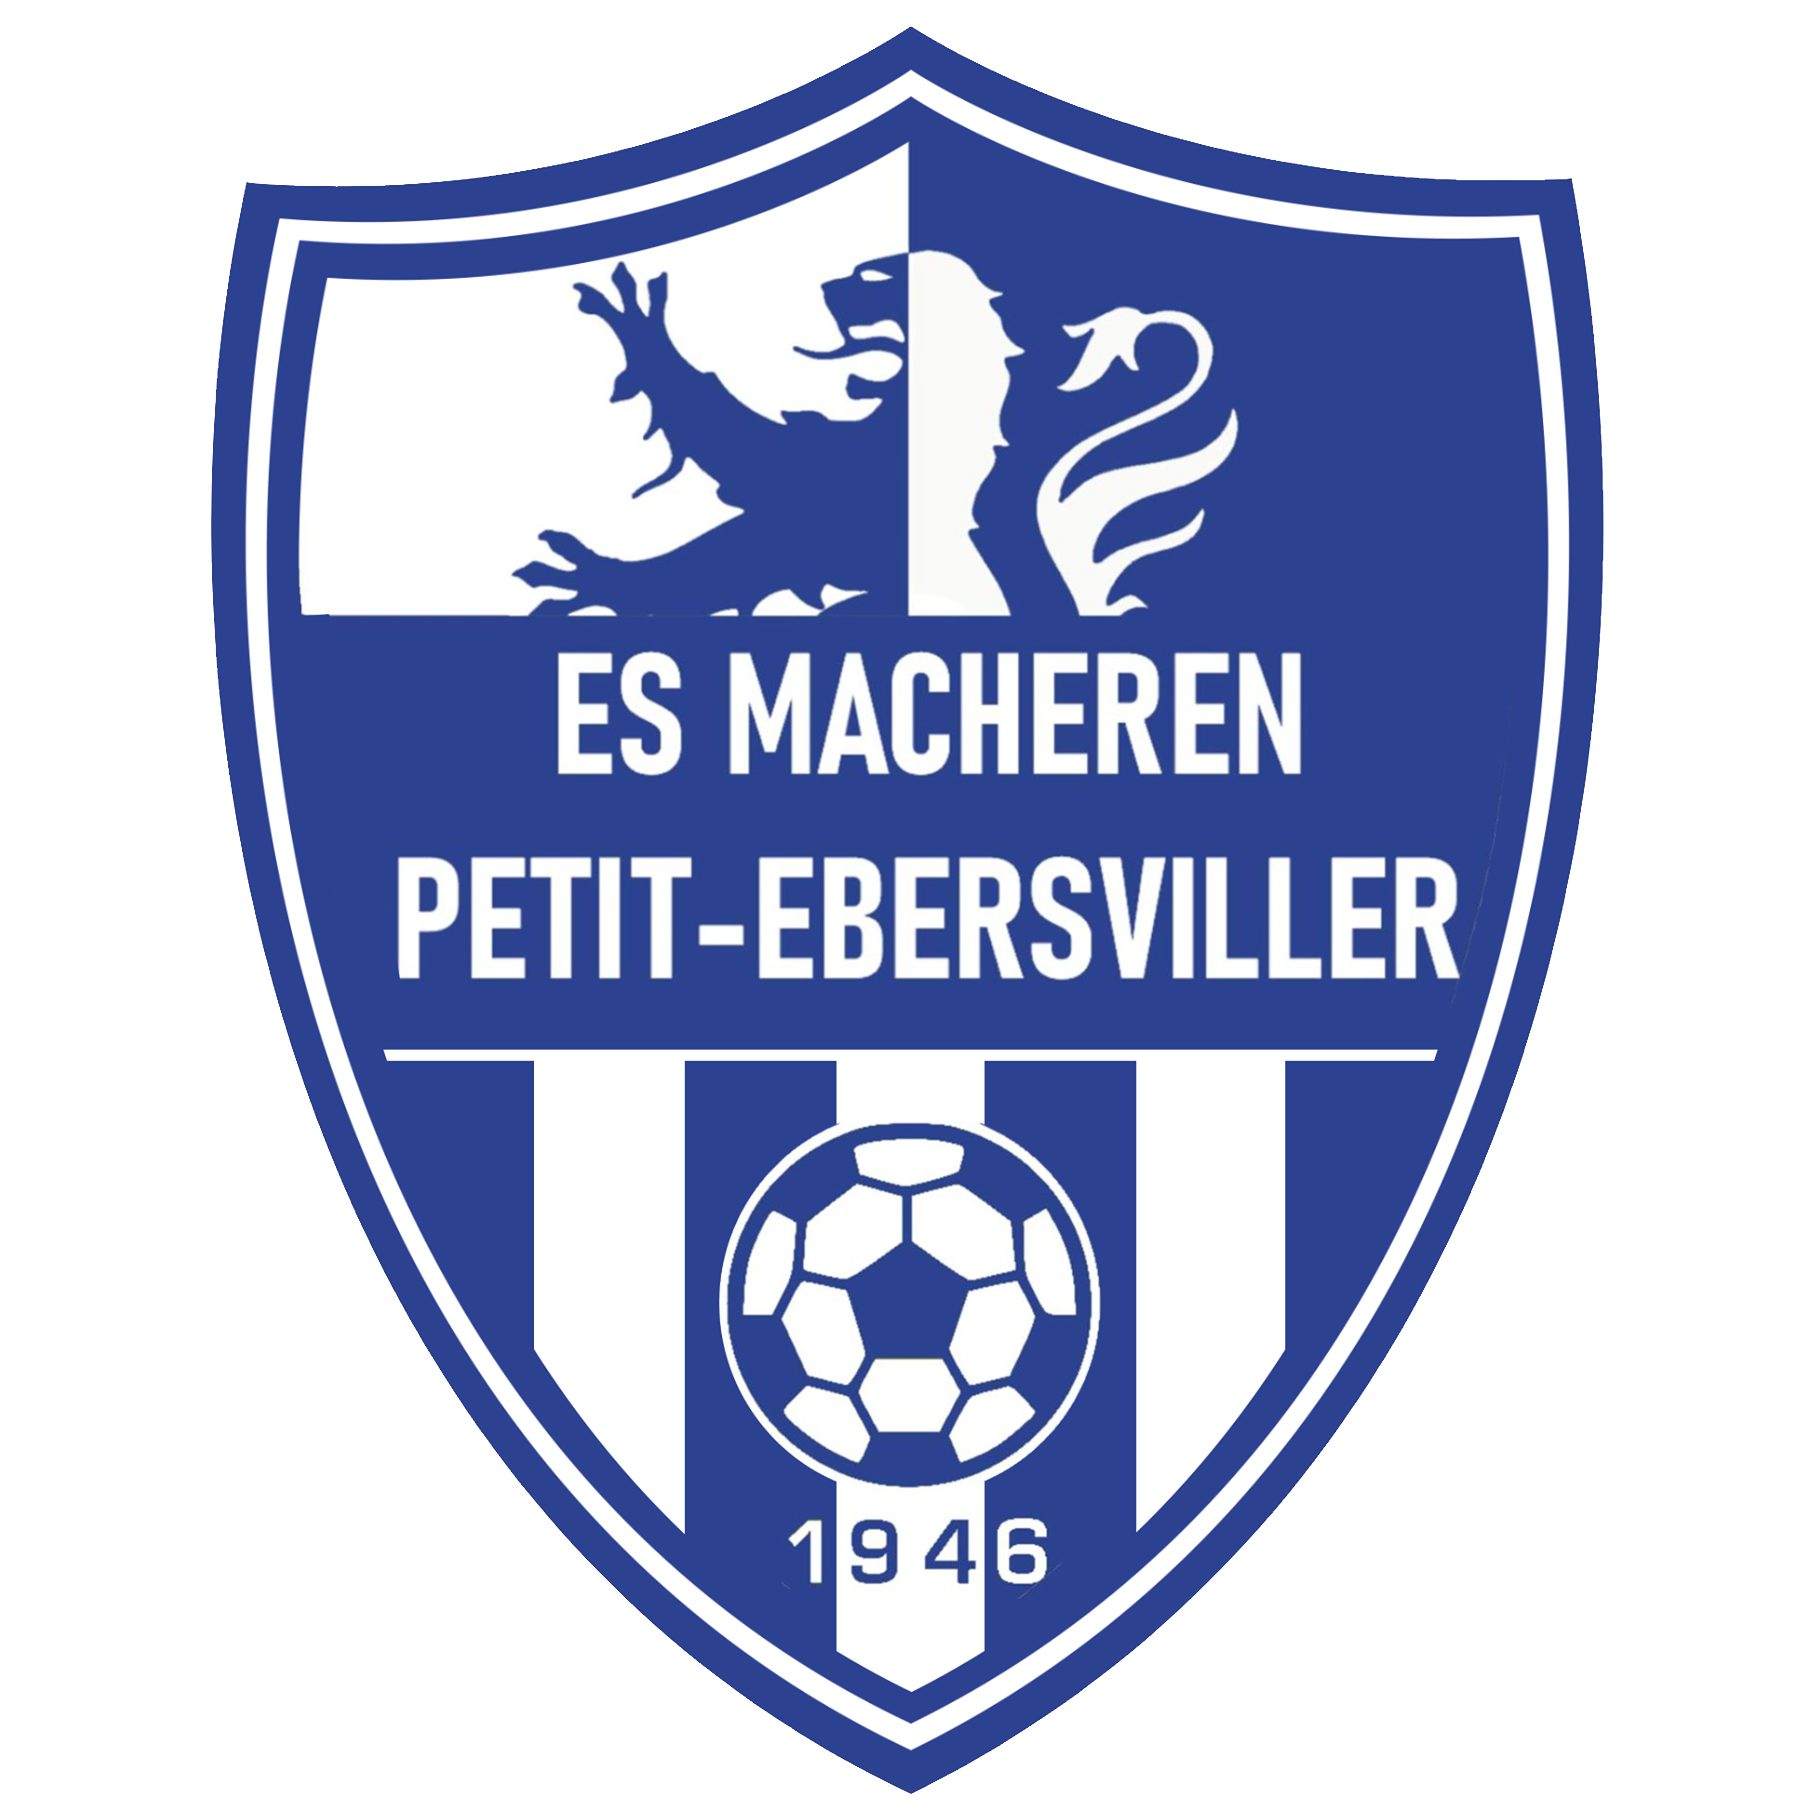 Wappen ES Macheren Petit-Ebersviller  129972